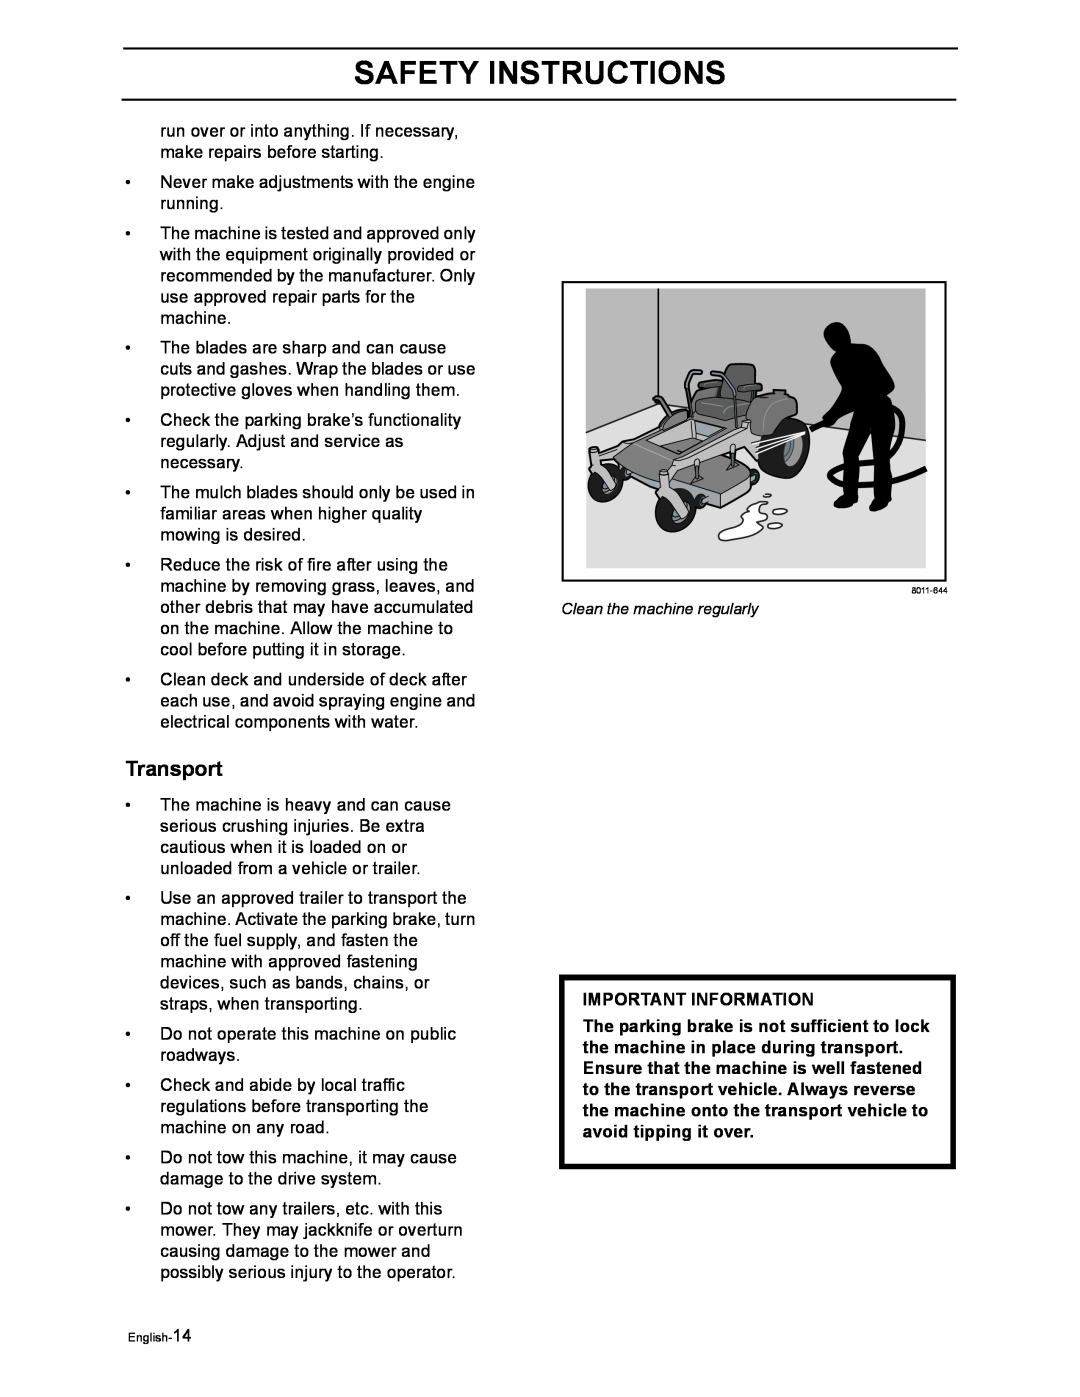 Yazoo/Kees ZEKW48190 manual Transport, Important Information, Safety Instructions 